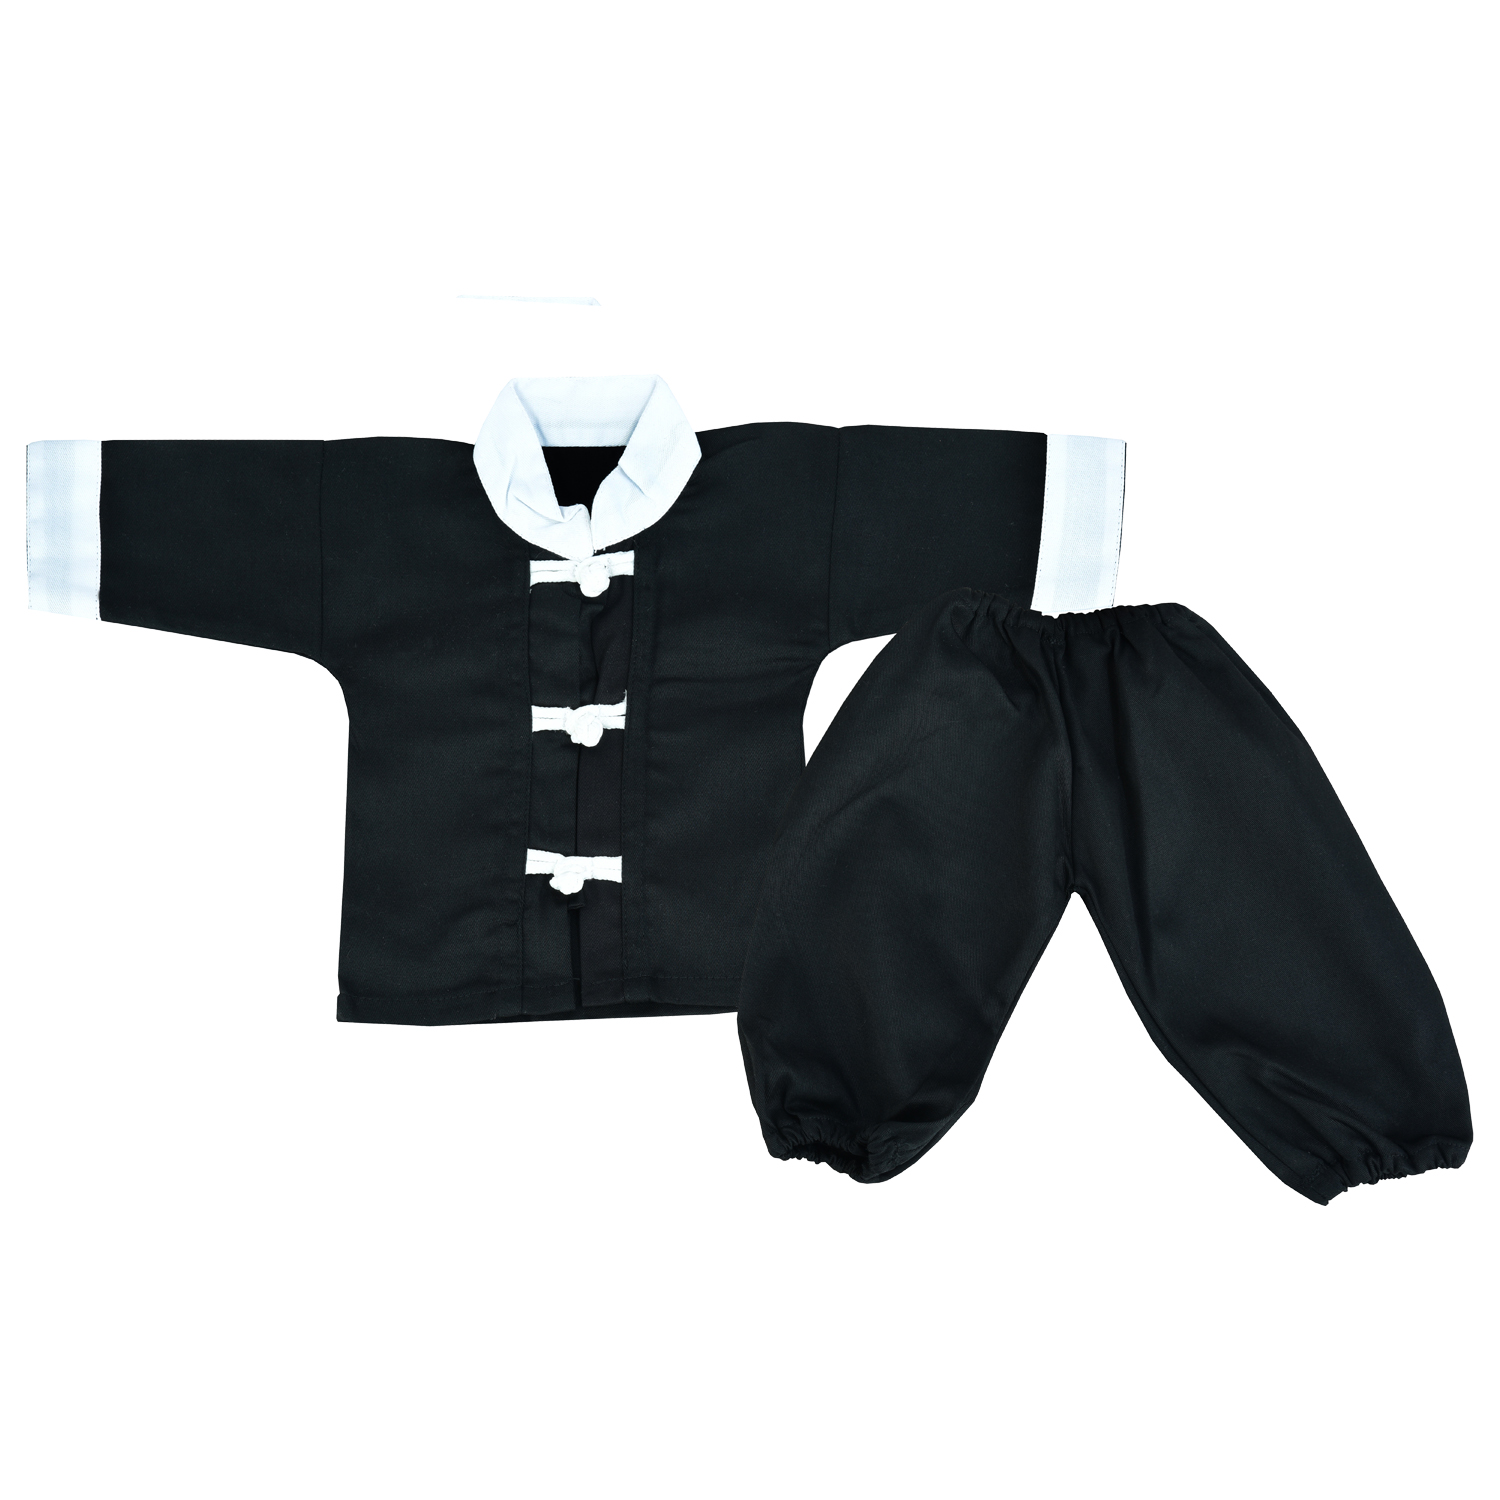 Baby Kung Fu Suit - Black (Infant Uniform) - Click Image to Close